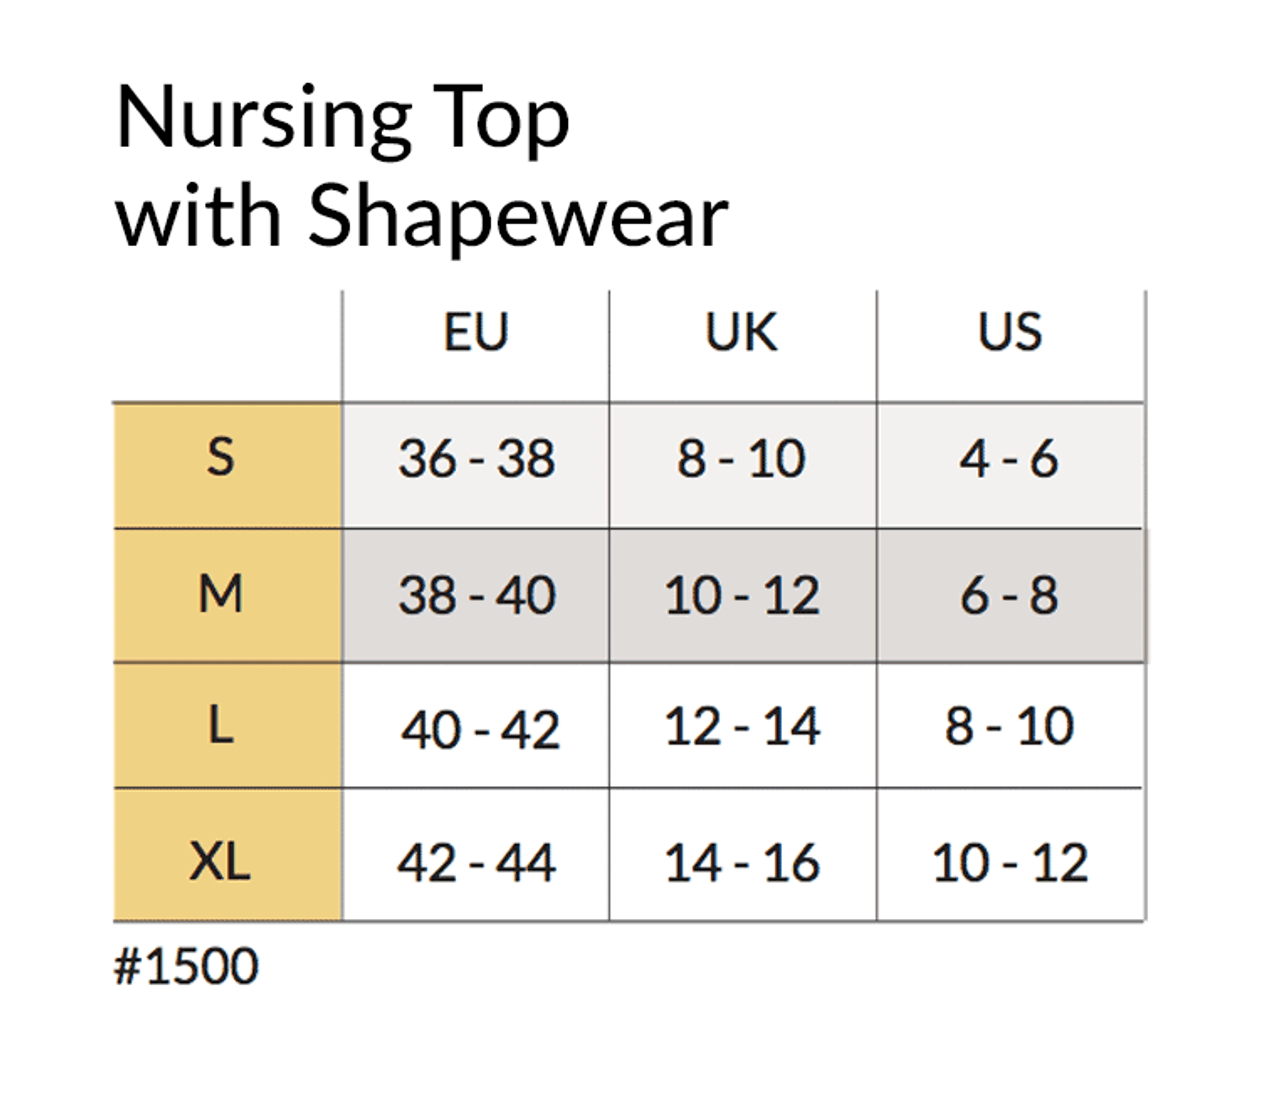 Nursing Top with Shapewear